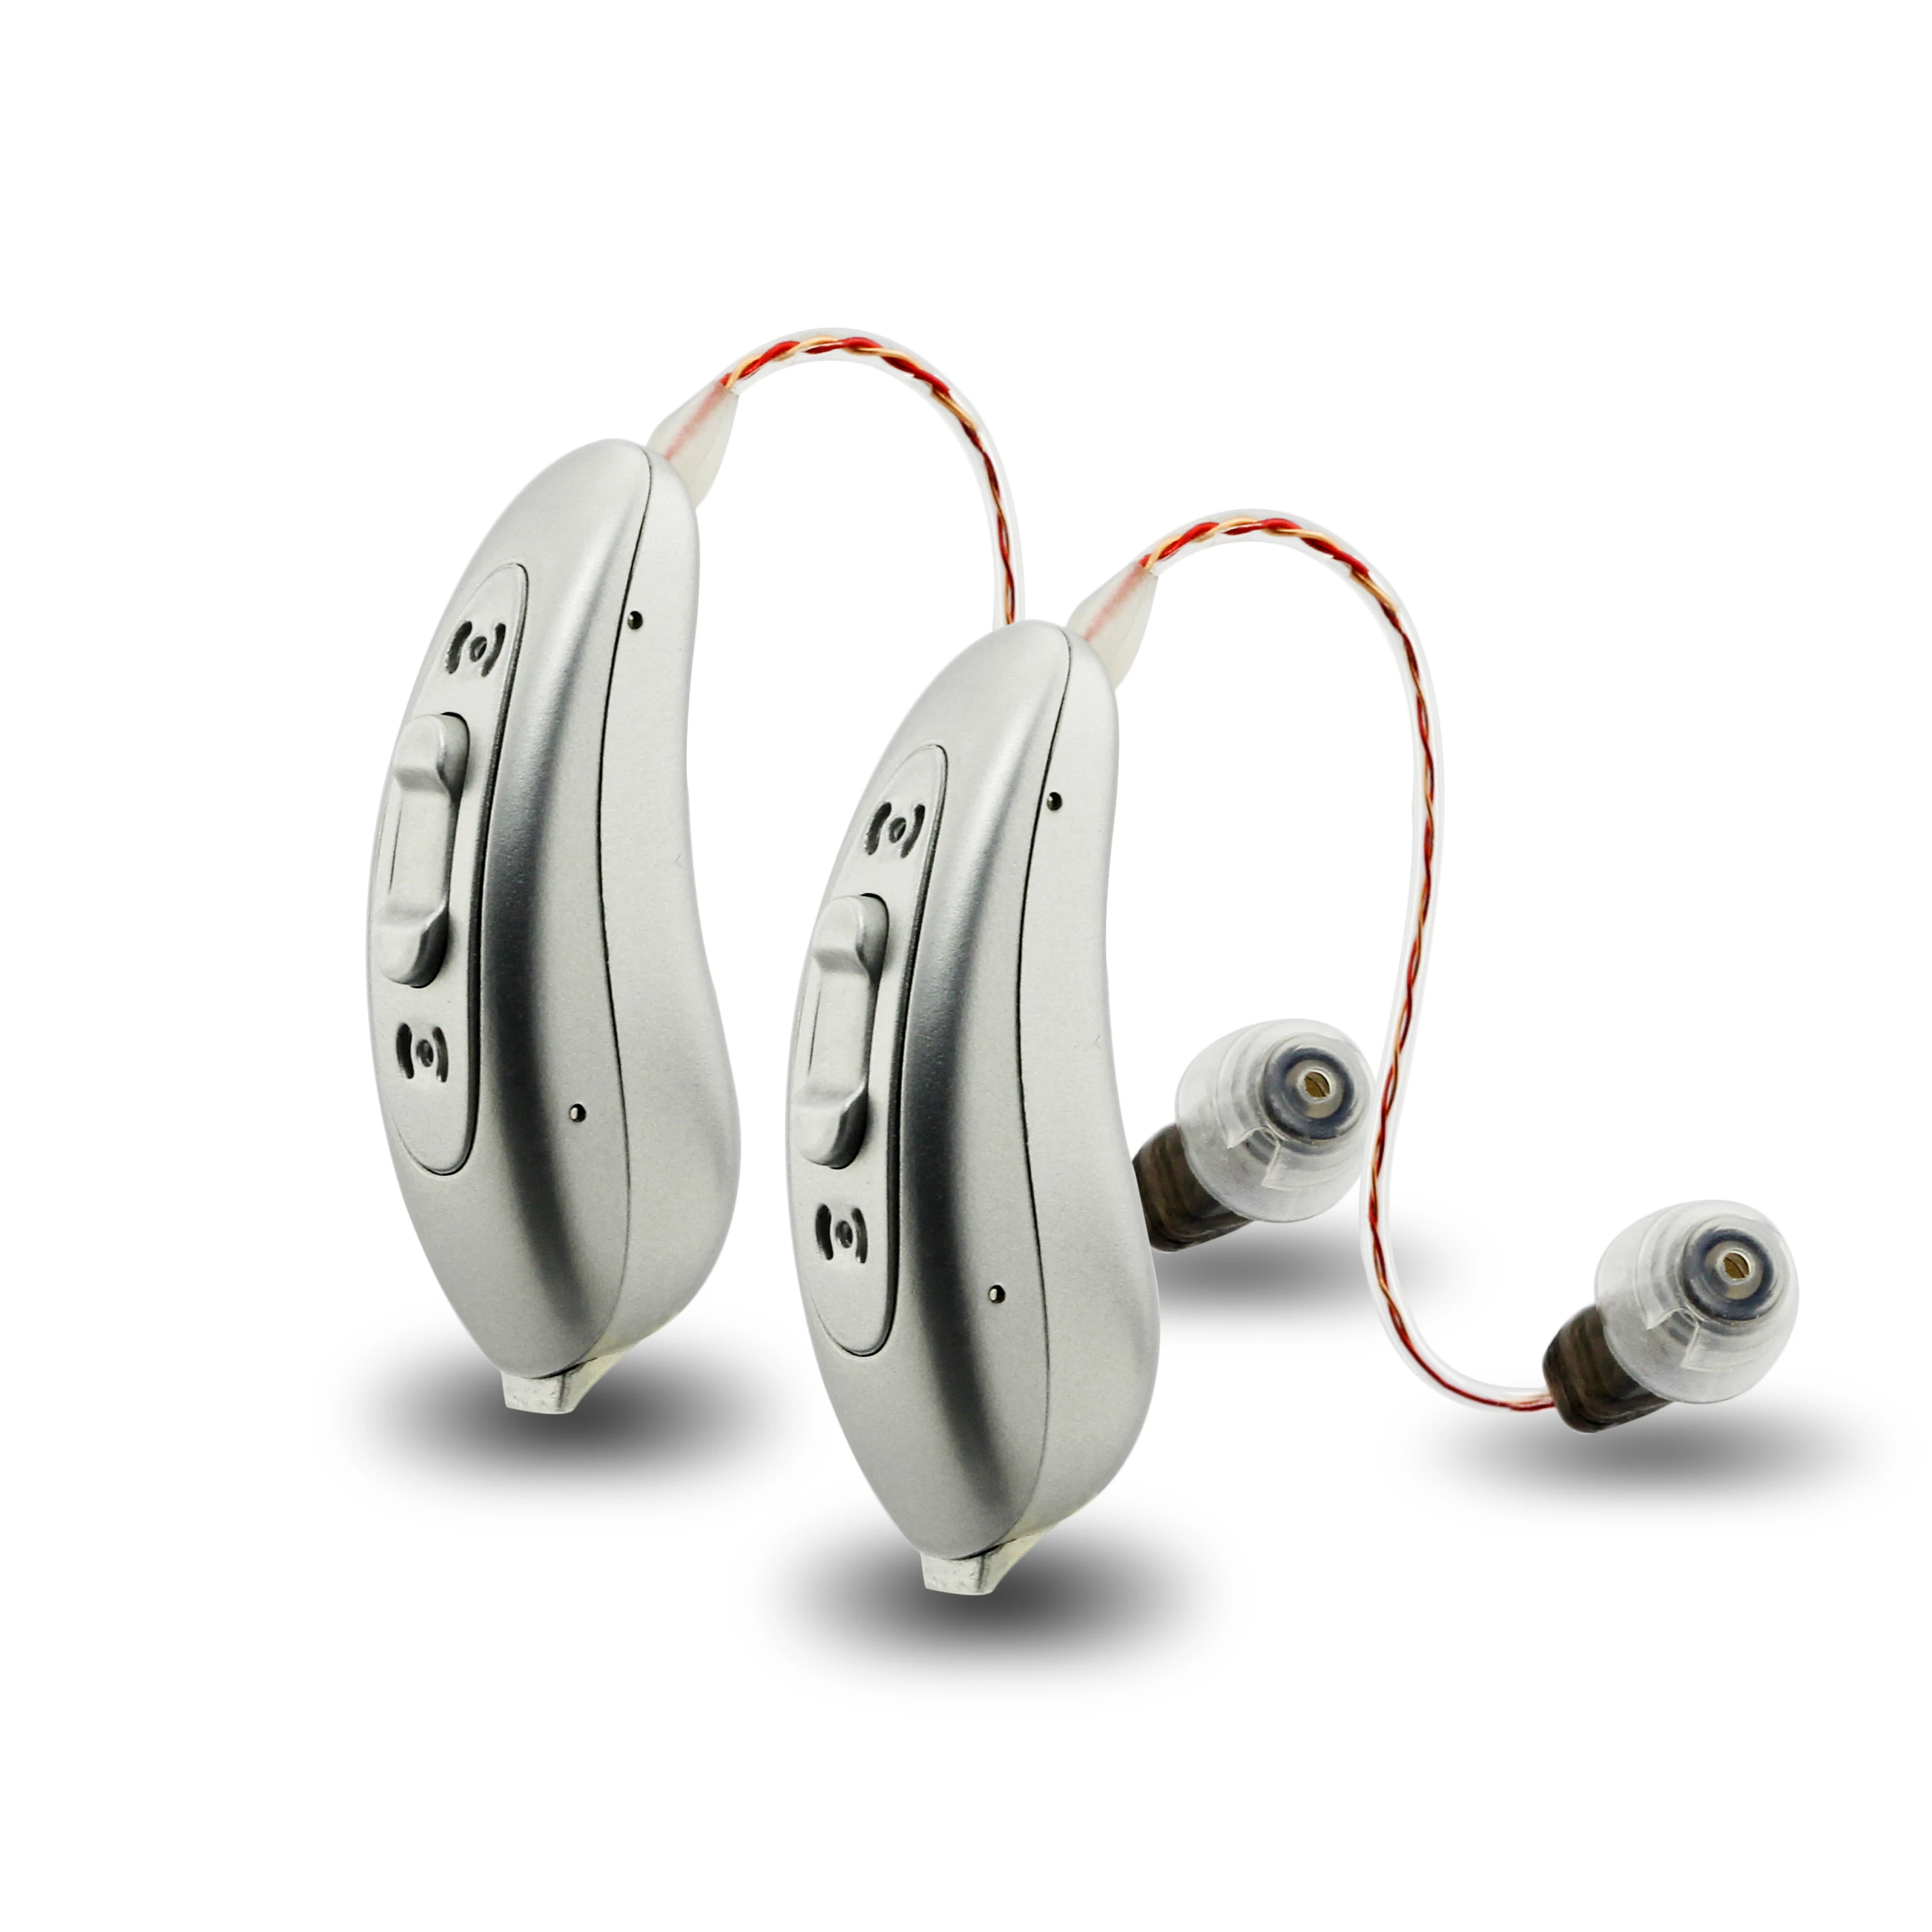 
Retone amazon mini detachable Wireless hearing aid open fit RIC  (62019845392)